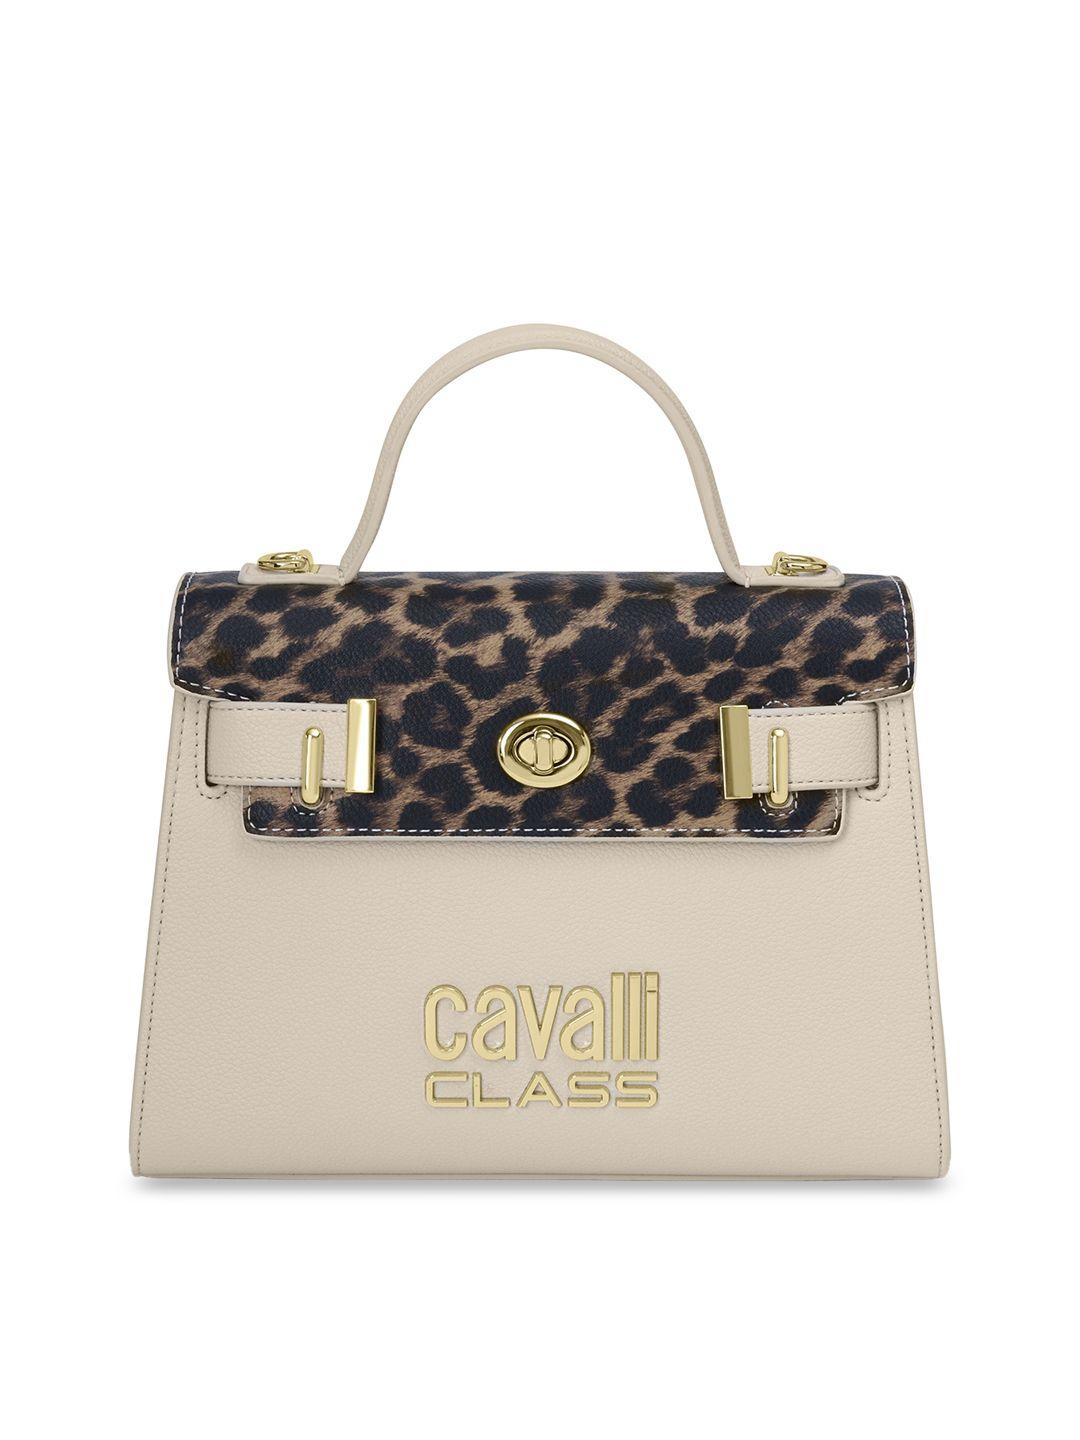 cavalli class animal printed structured satchel handbag